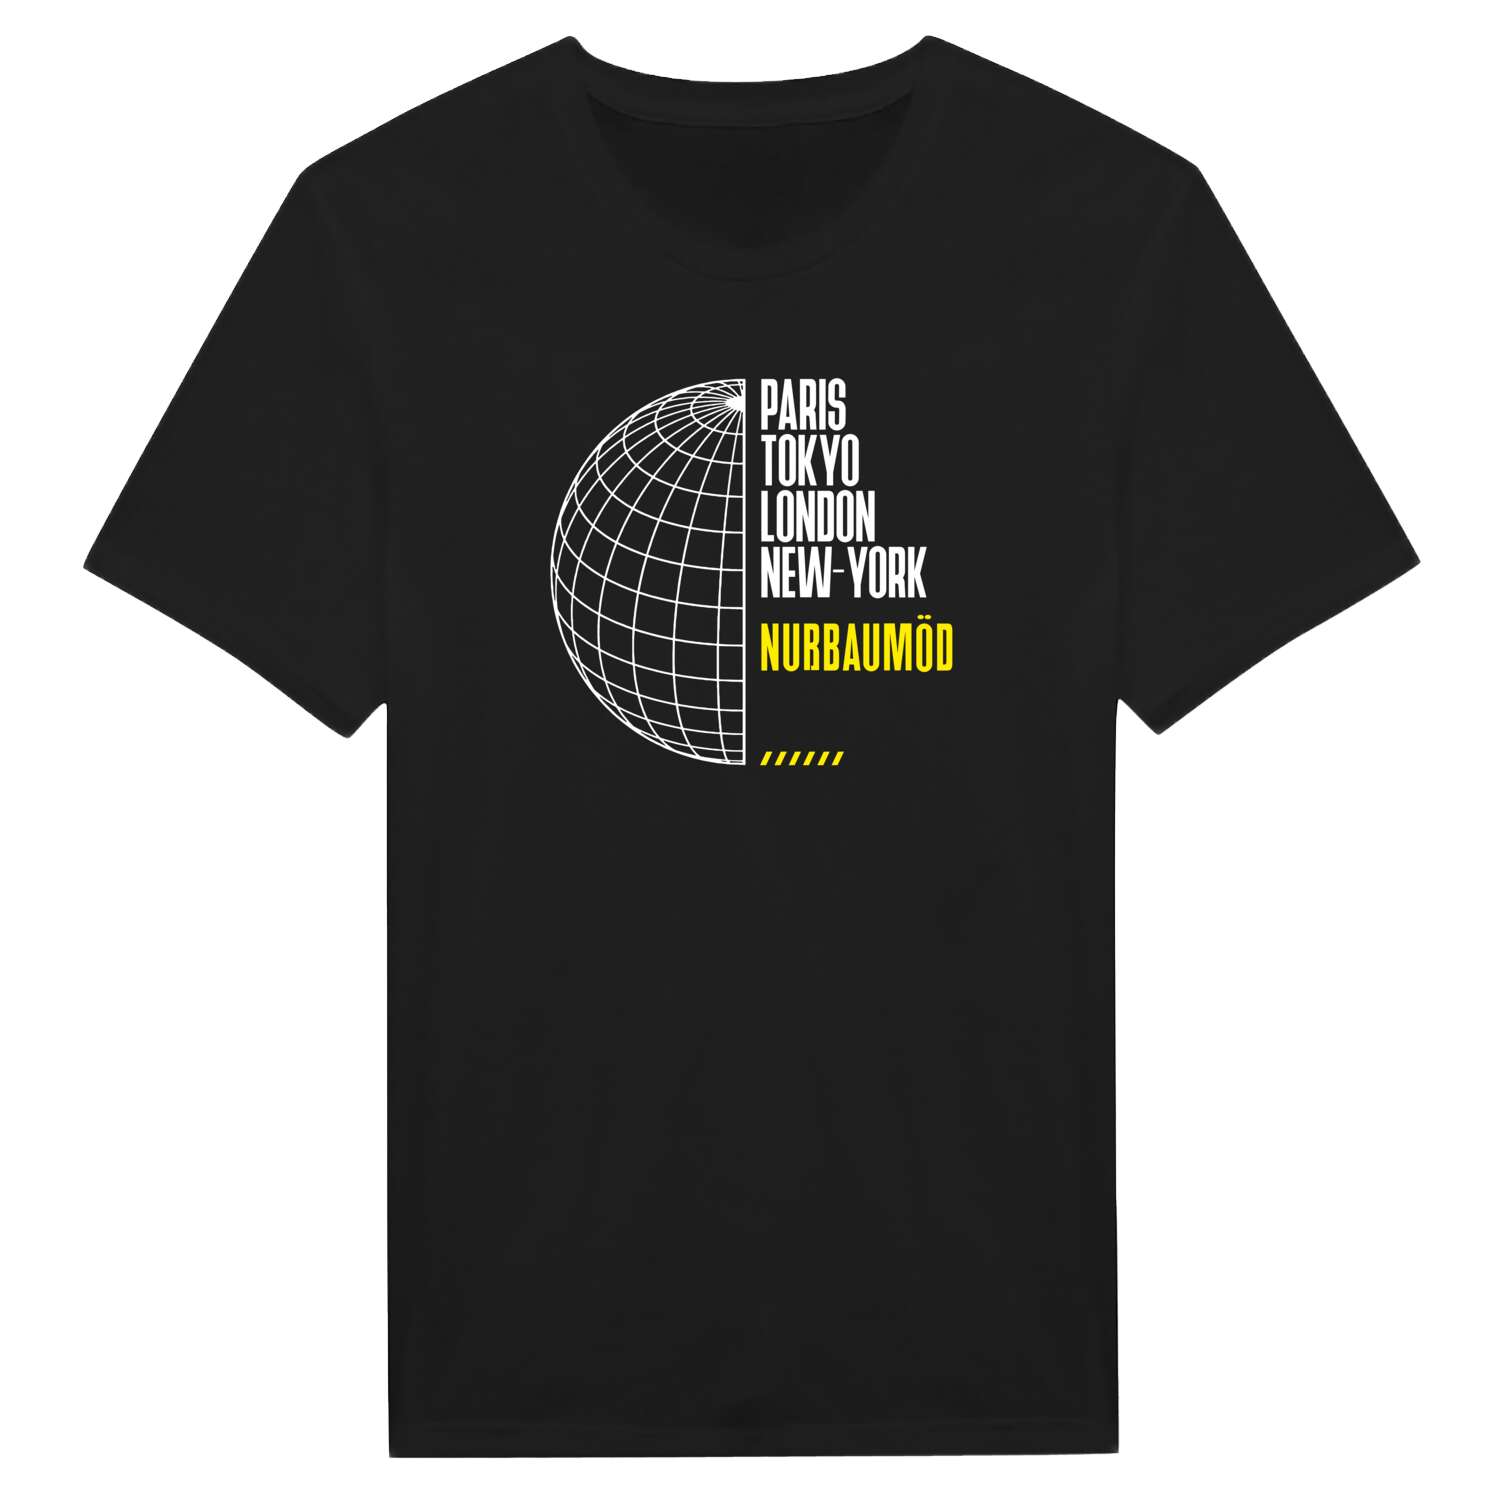 Nußbaumöd T-Shirt »Paris Tokyo London«